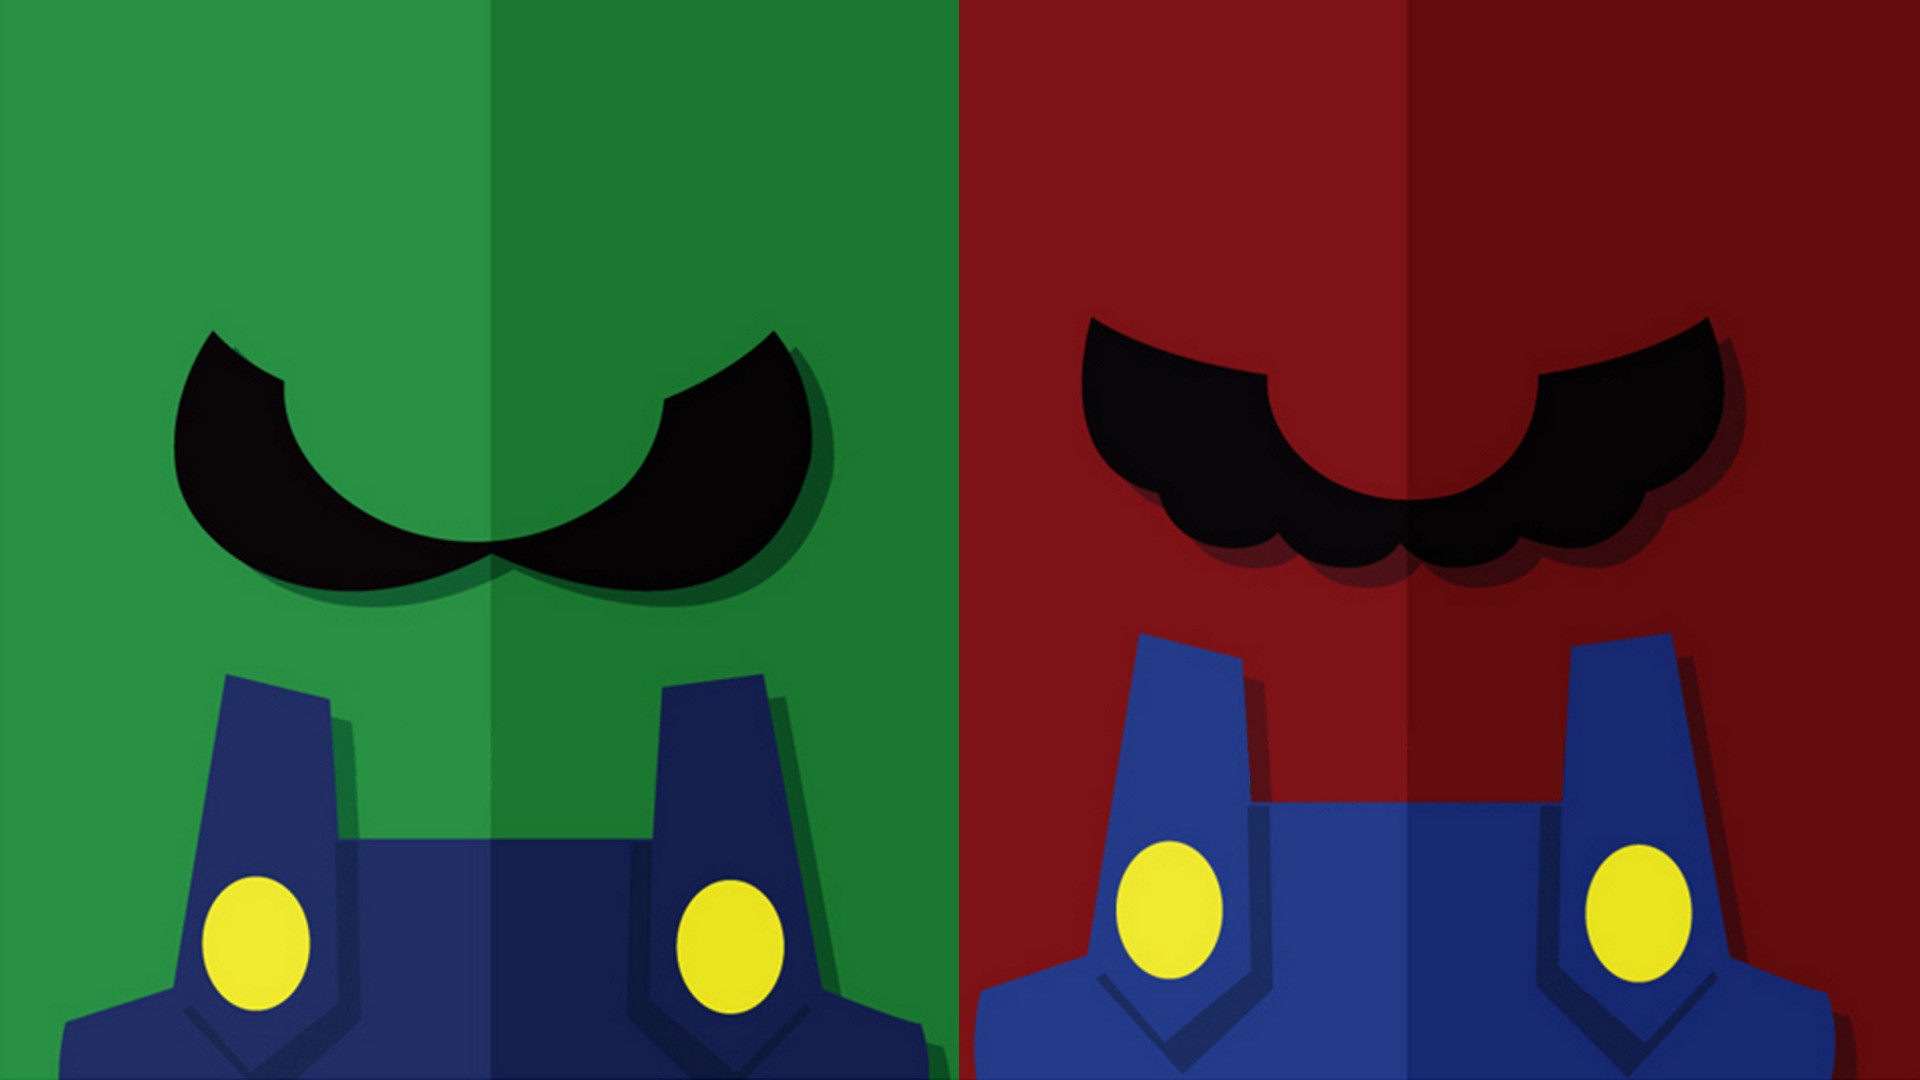 Mario And Luigi Wallpaper Hd 64 Images